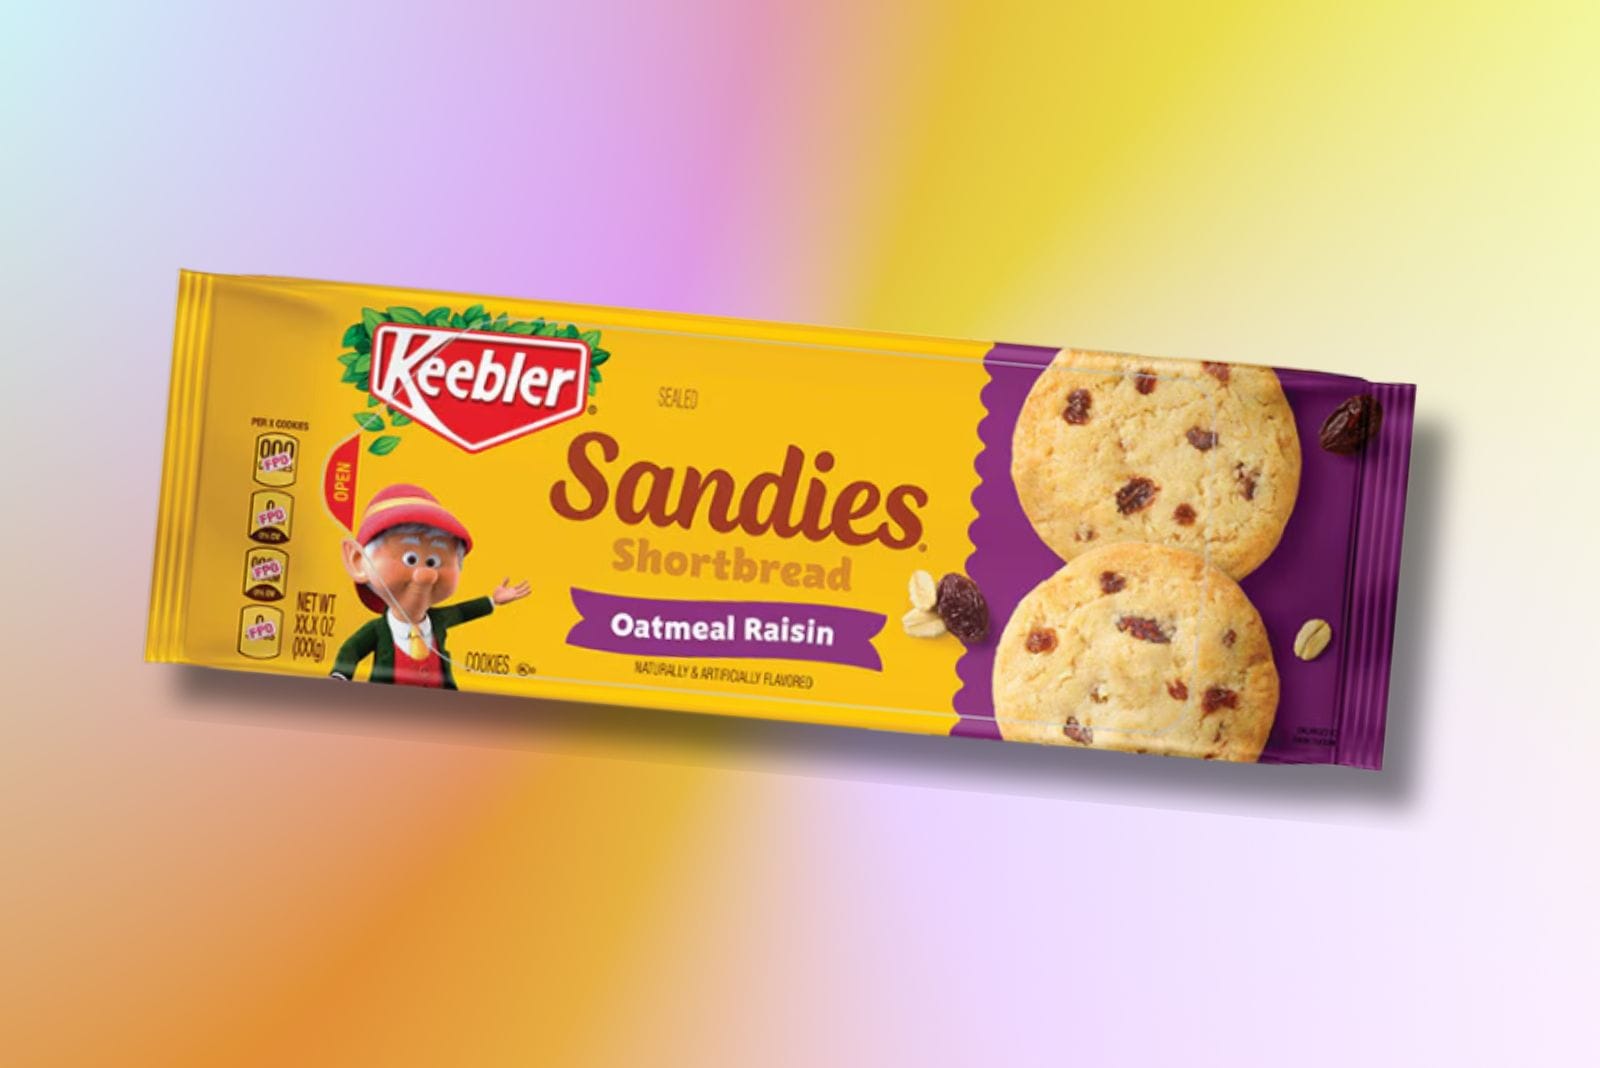 Keebler Oatmeal Raisin Sandies cookies package on yellow and purple backdrop